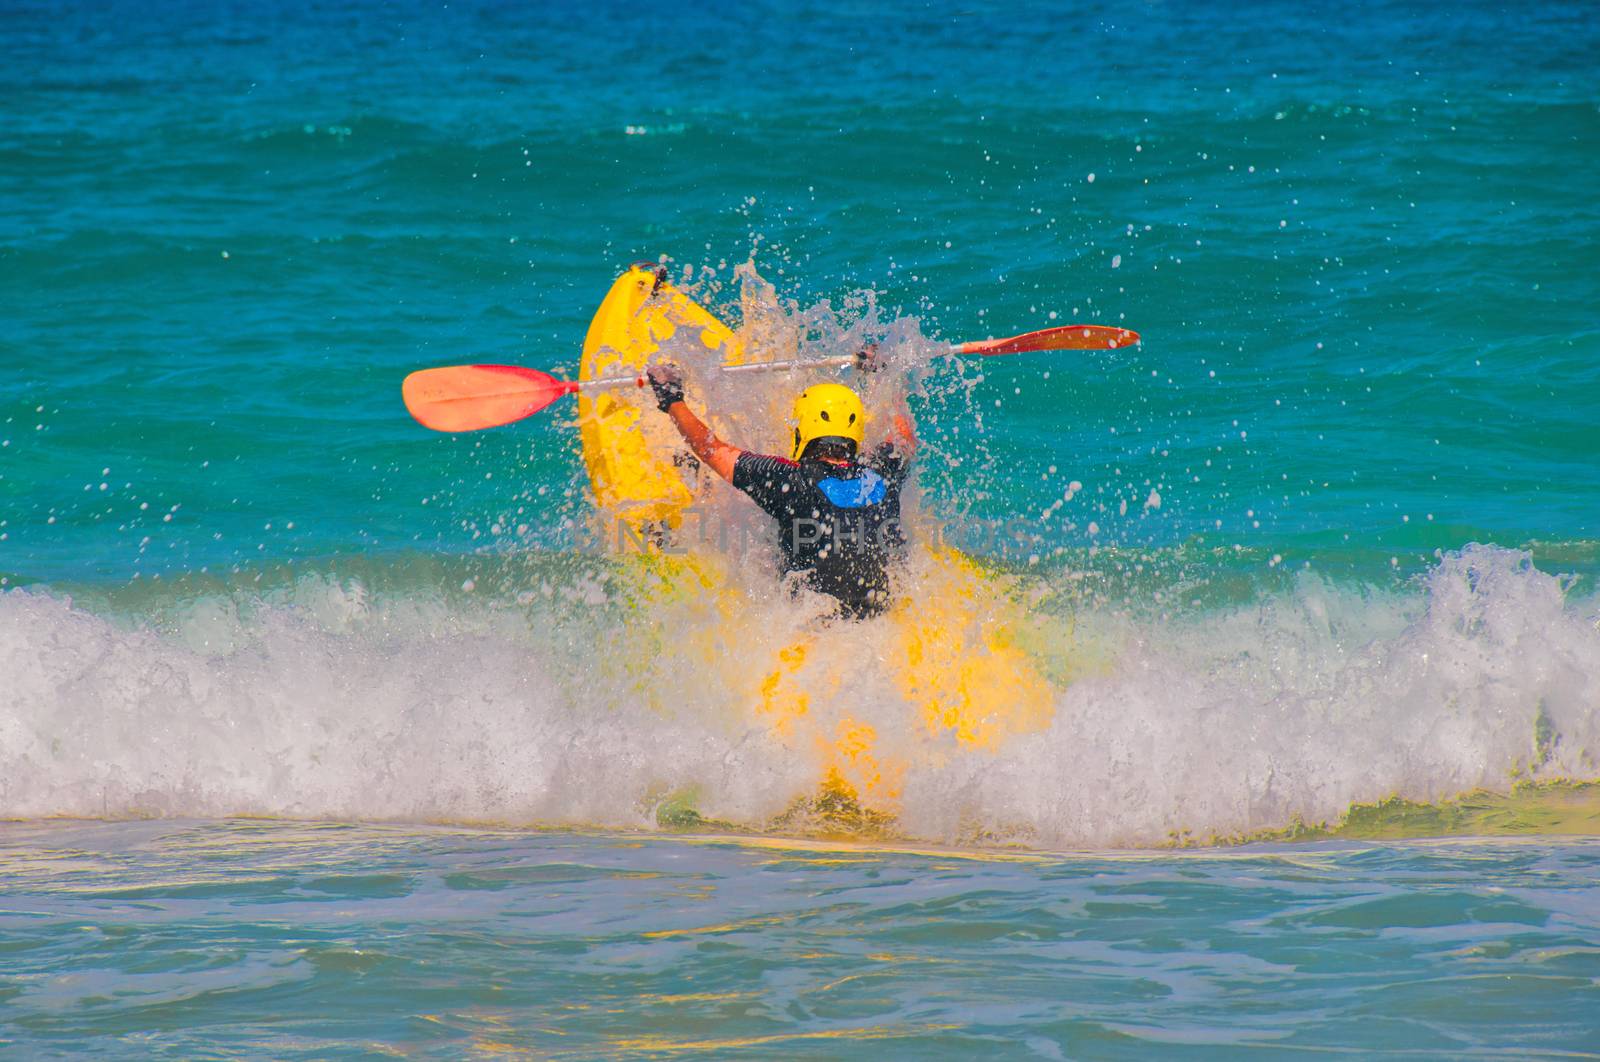 jump kayak through wave by ben44